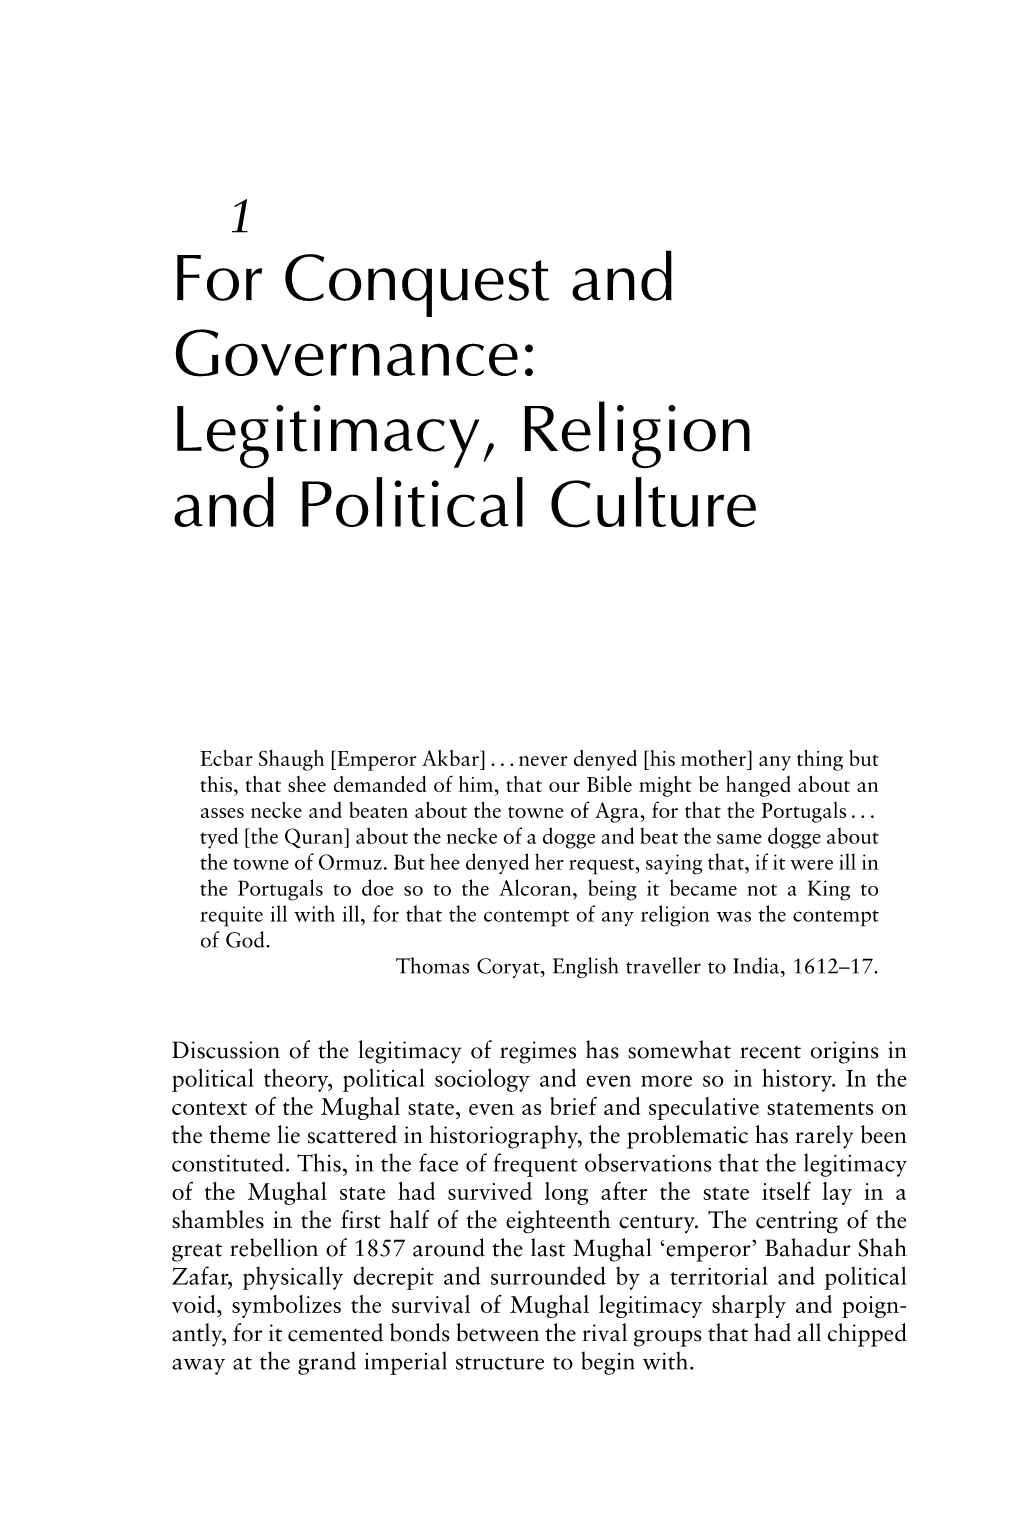 Legitimacy, Religion and Political Culture